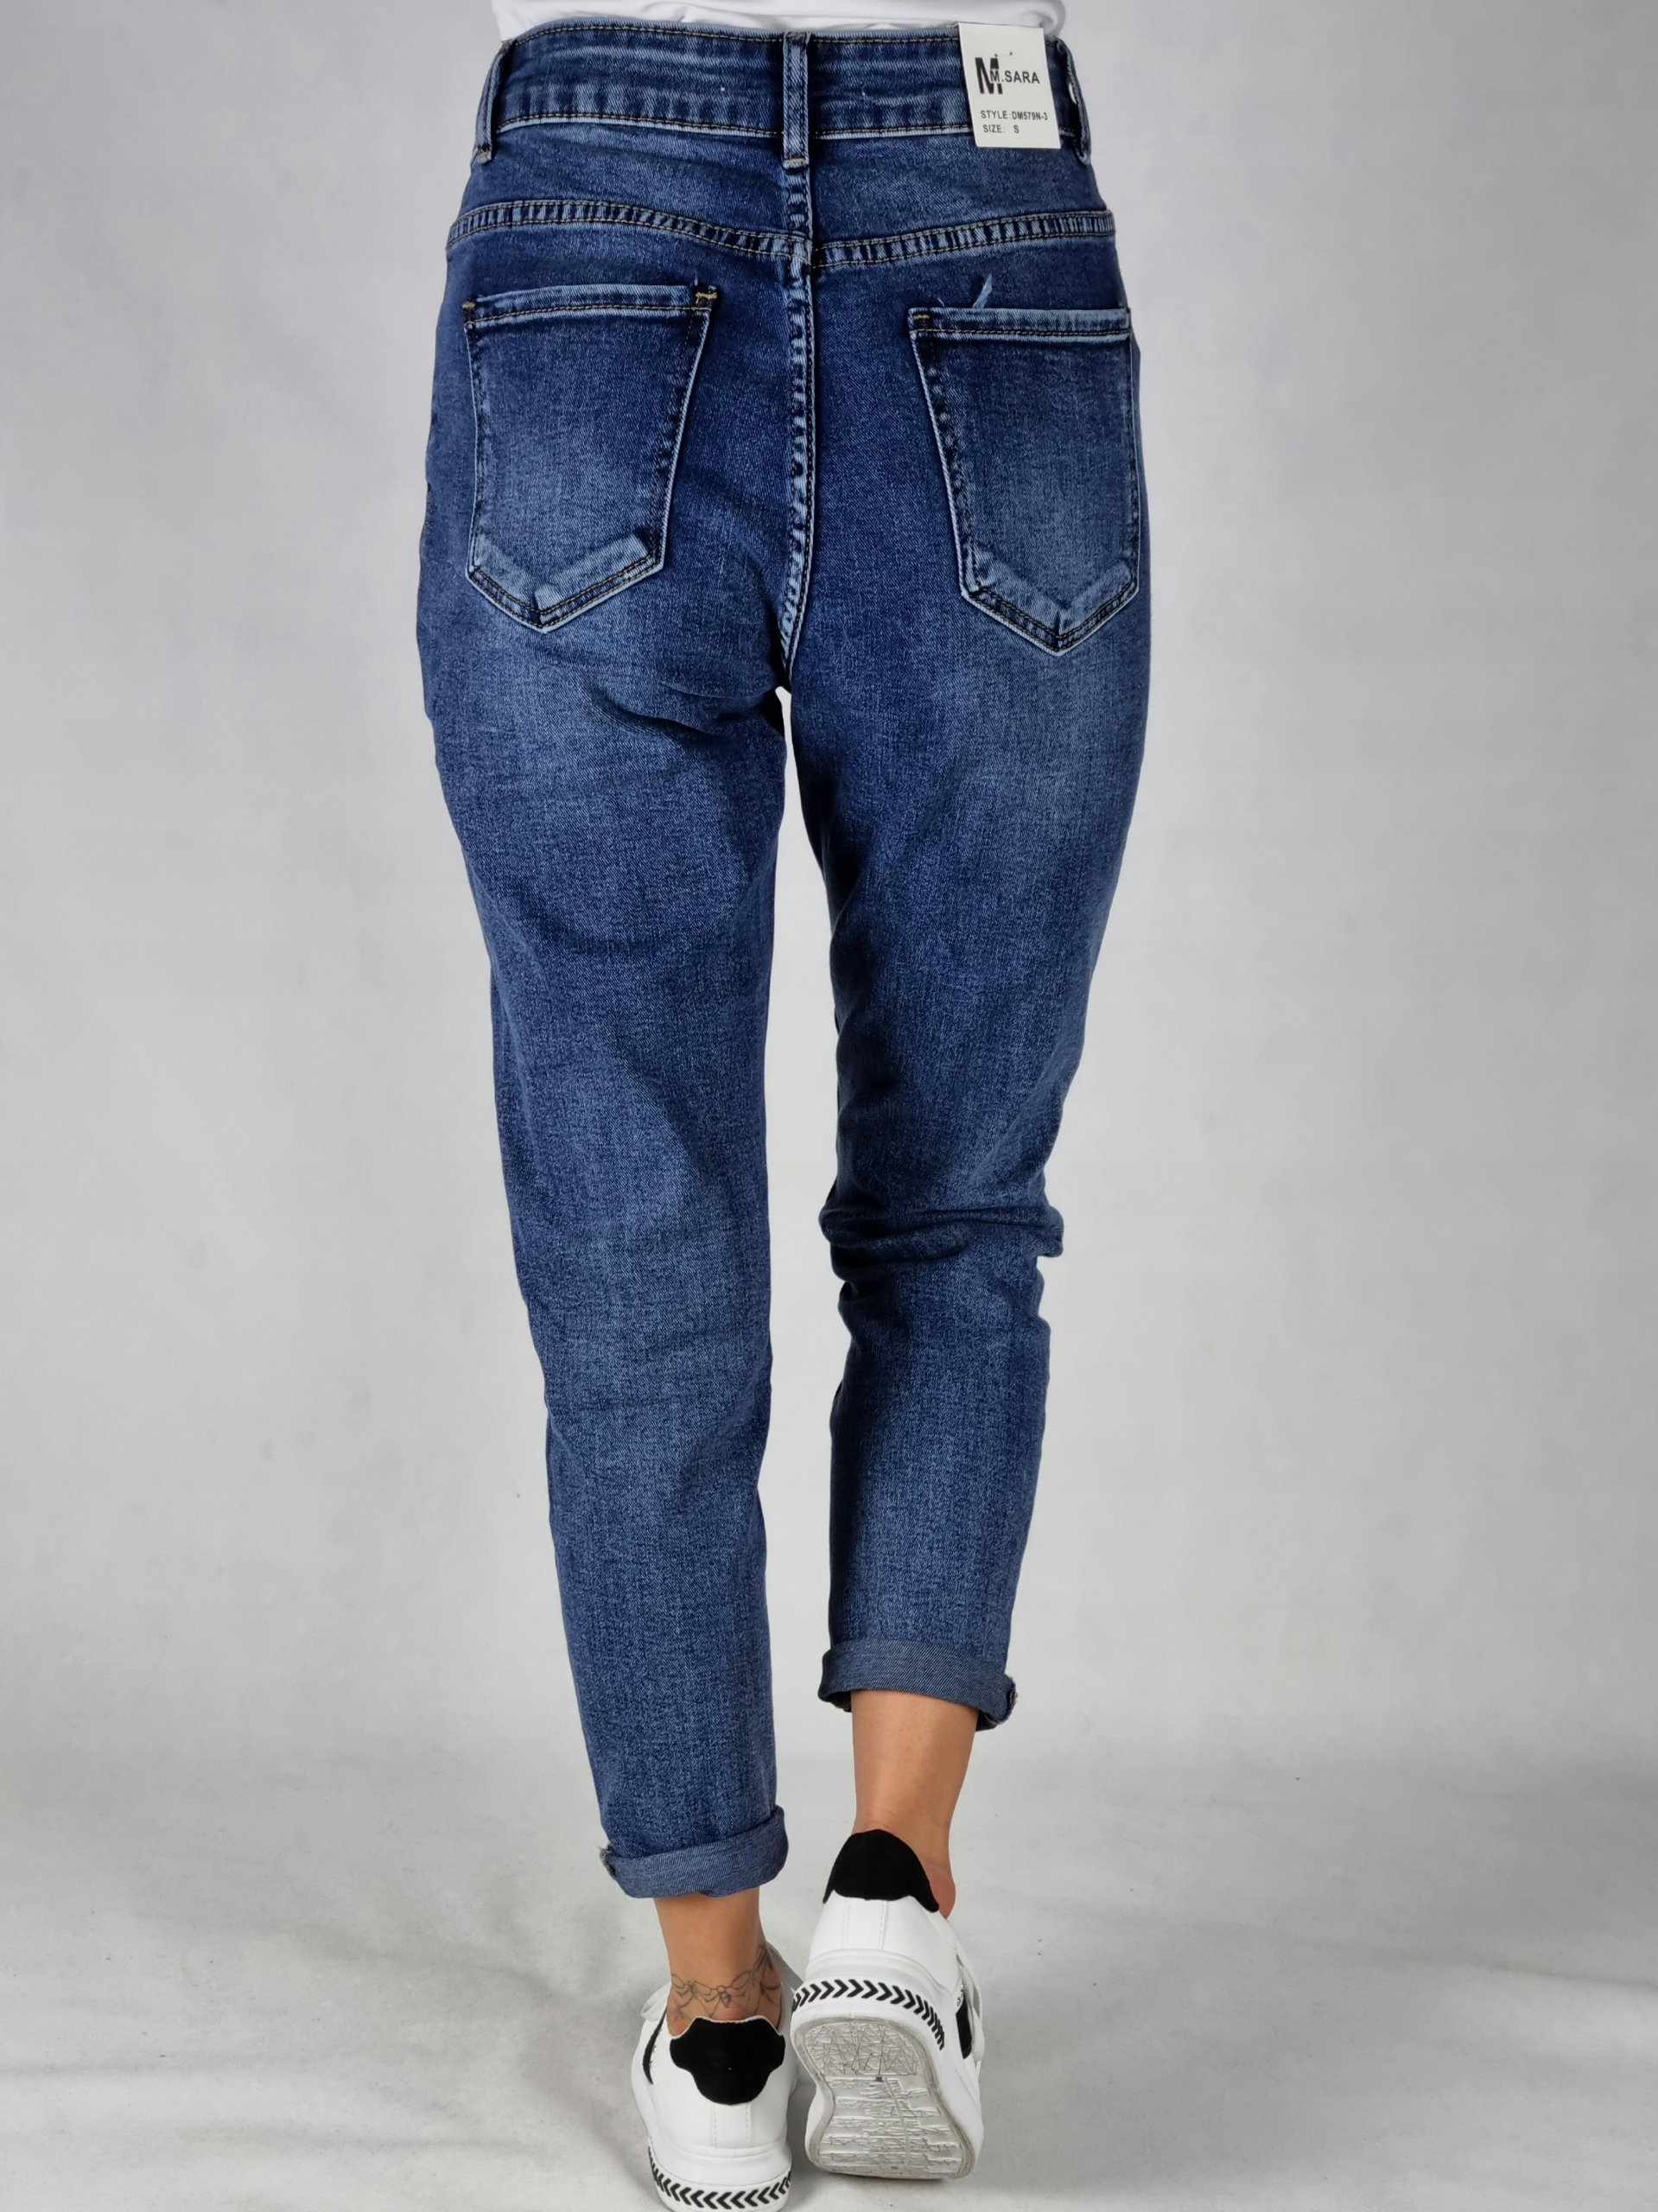 M. SARA BOYFRIEND джинсовые брюки размер M Leg Length long